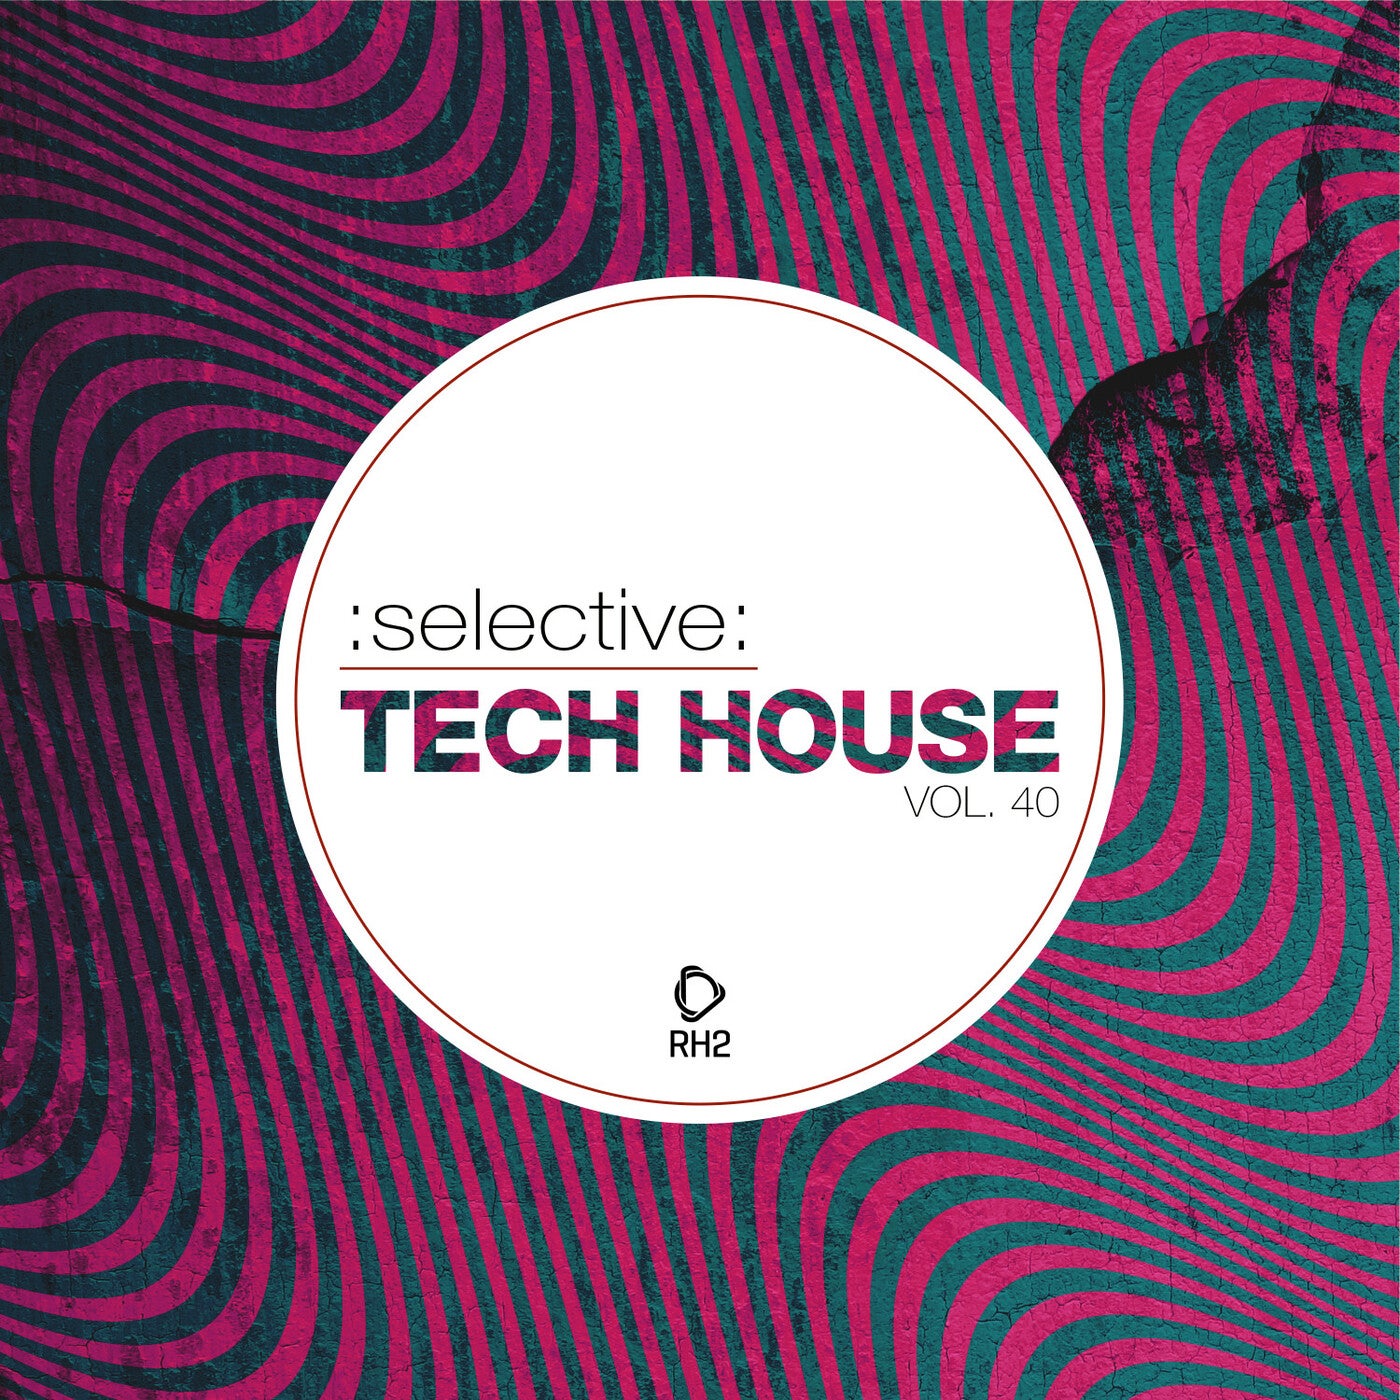 Selective: Tech House Vol. 40